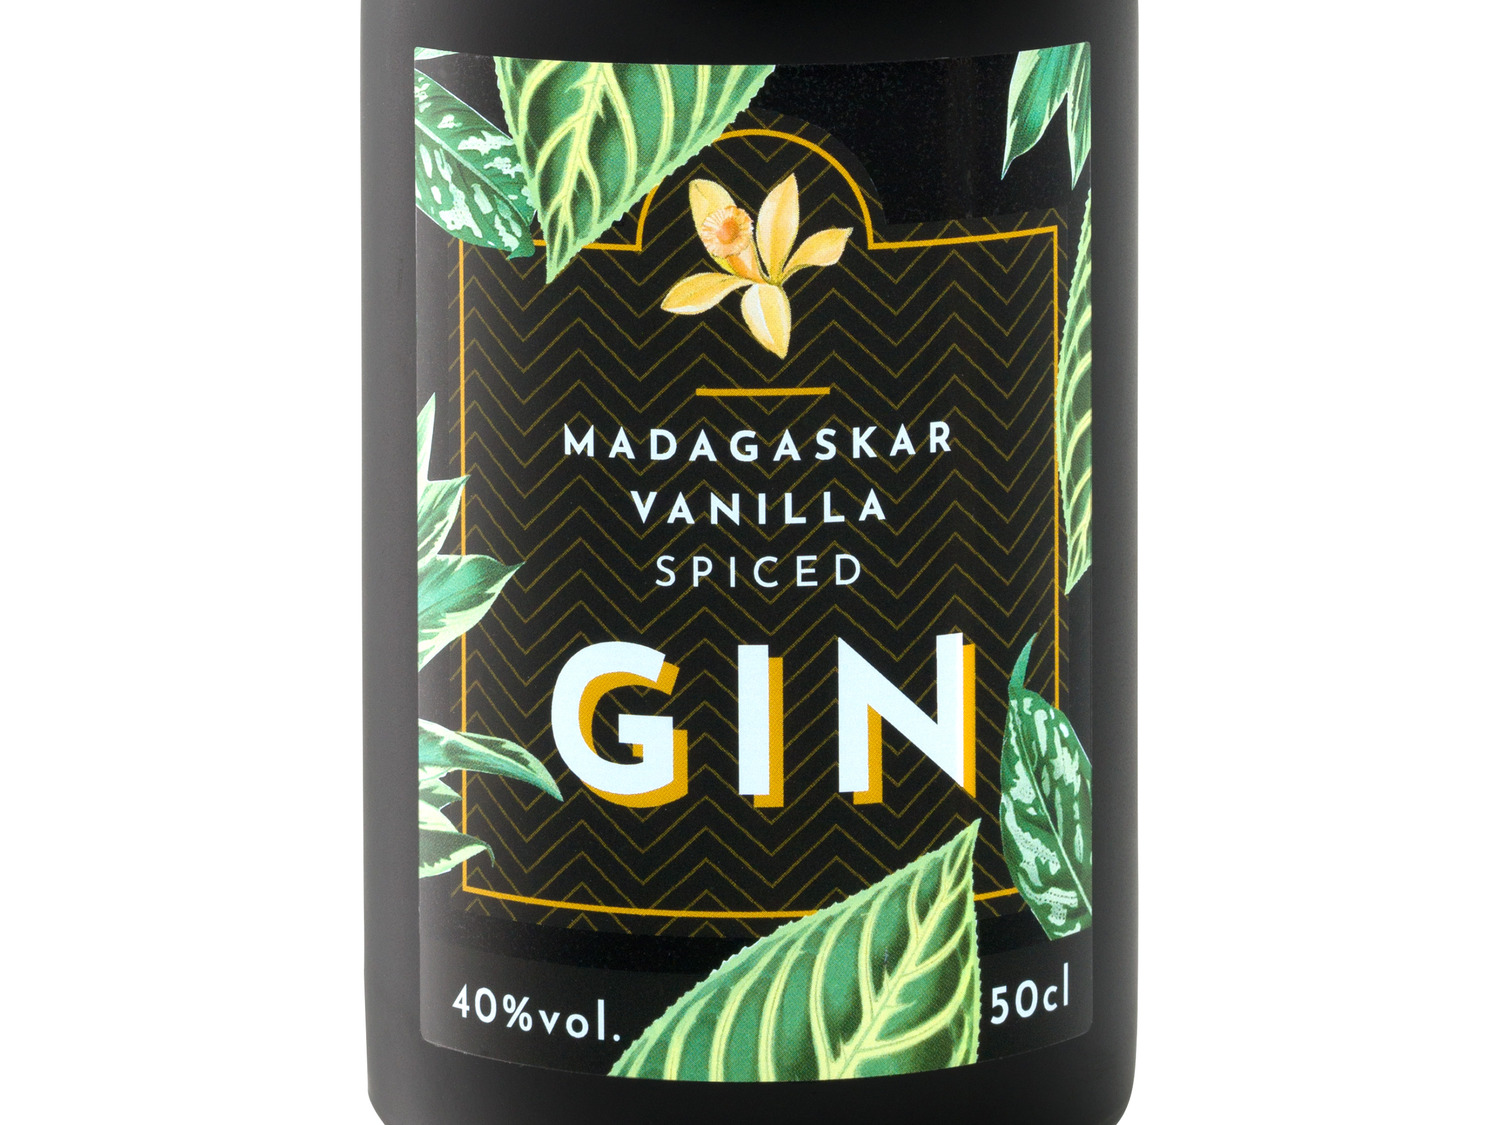 Vanilla Spiced Gin 40% LIDL Vol Madagascar |